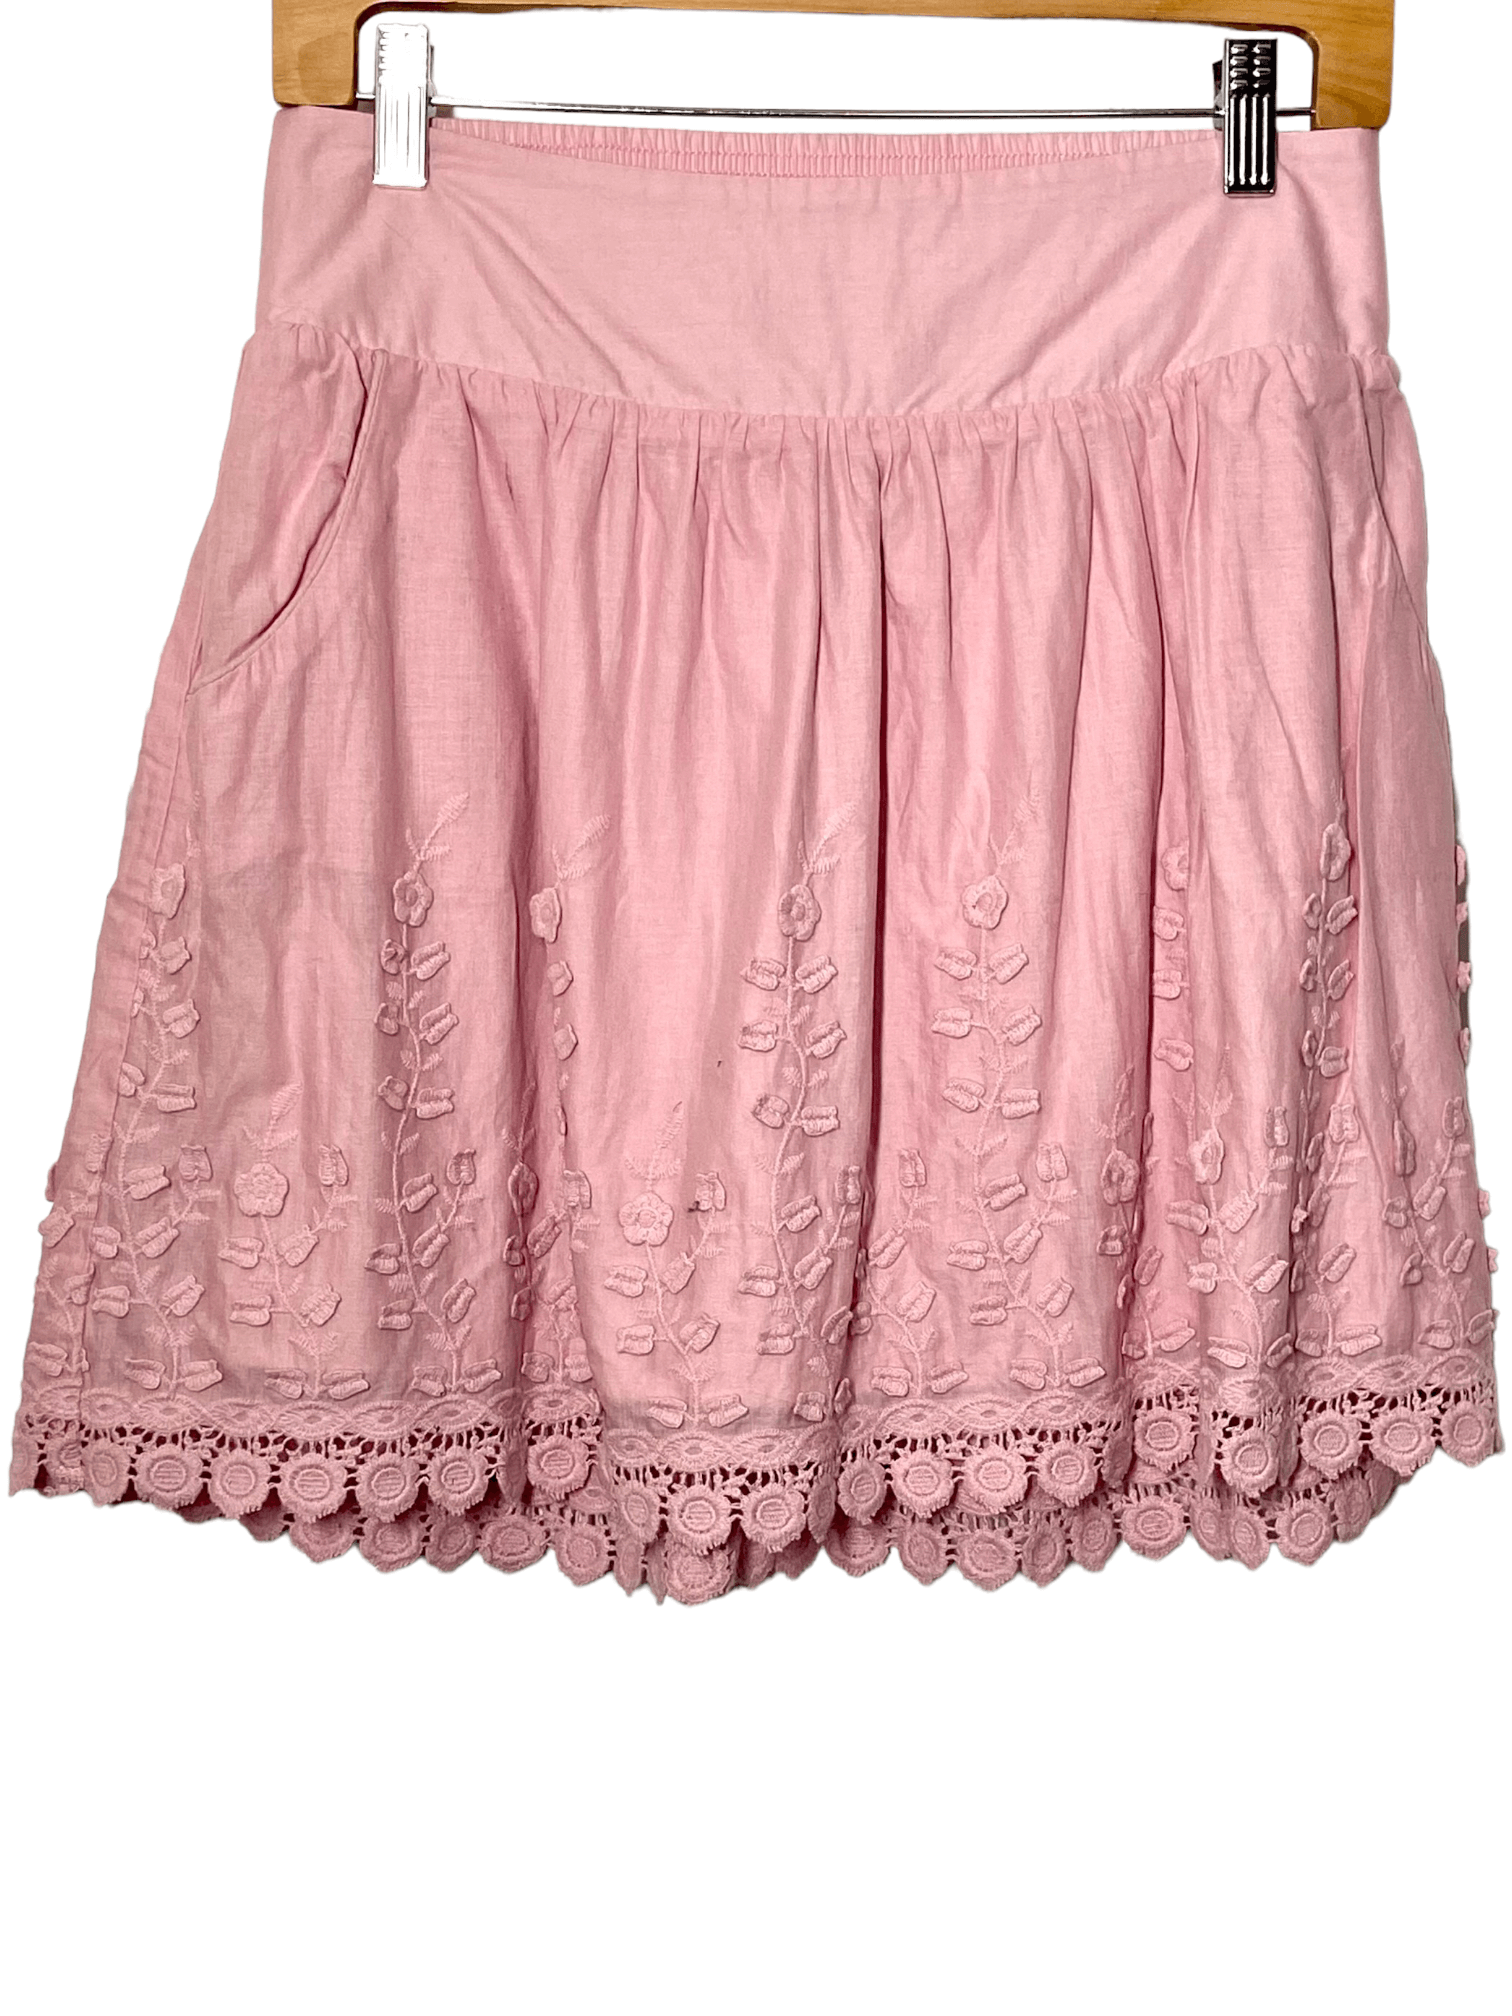 Soft Summer CHARLOTTE RUSSE taffy pink floral crochet trim mini skirt